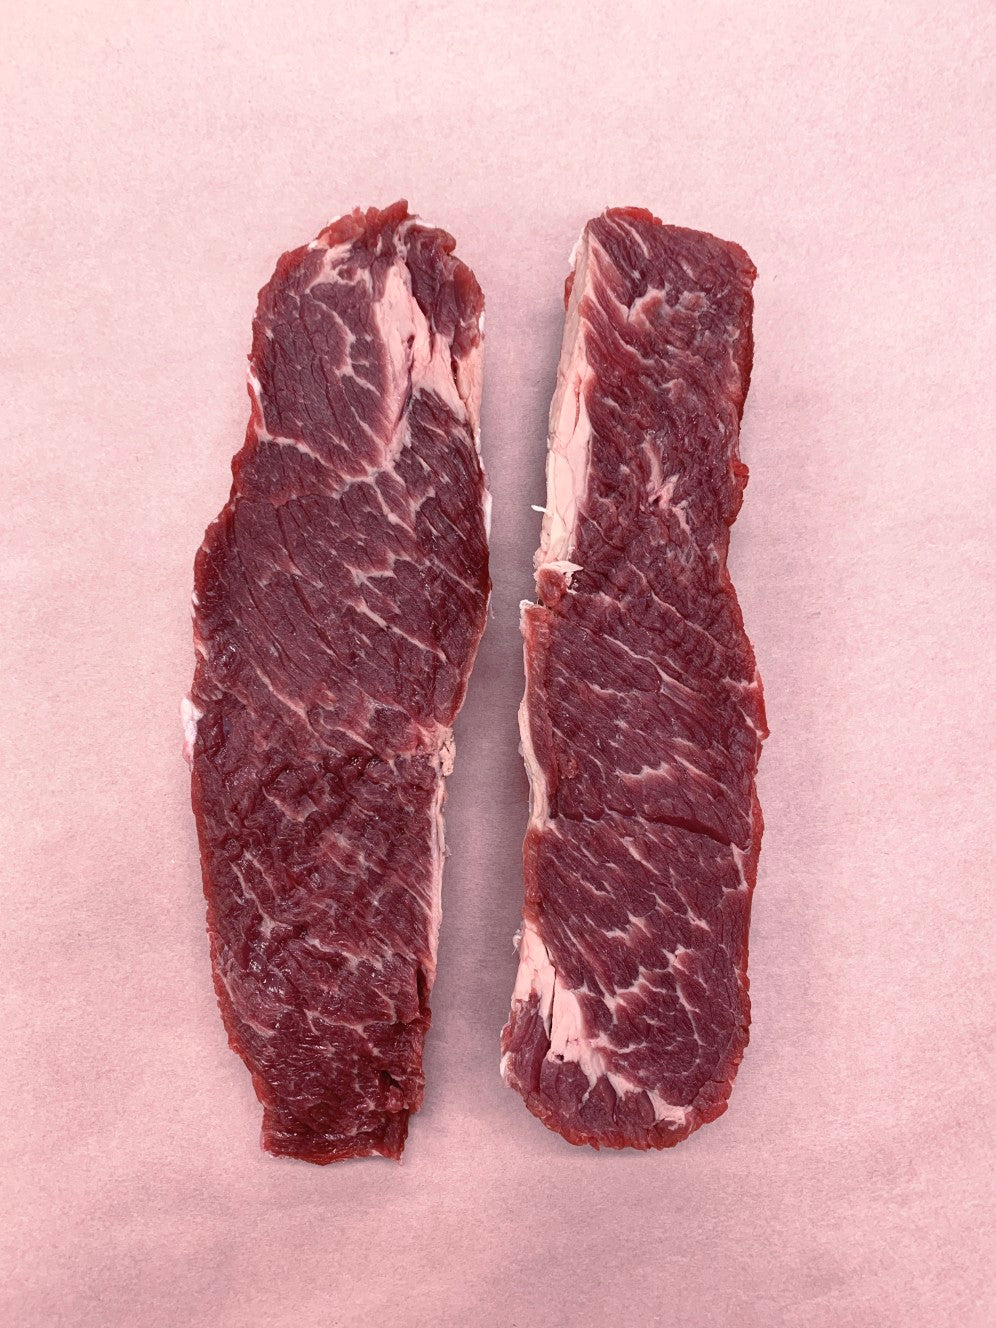 fresh (un-aged) steak, by the 200g